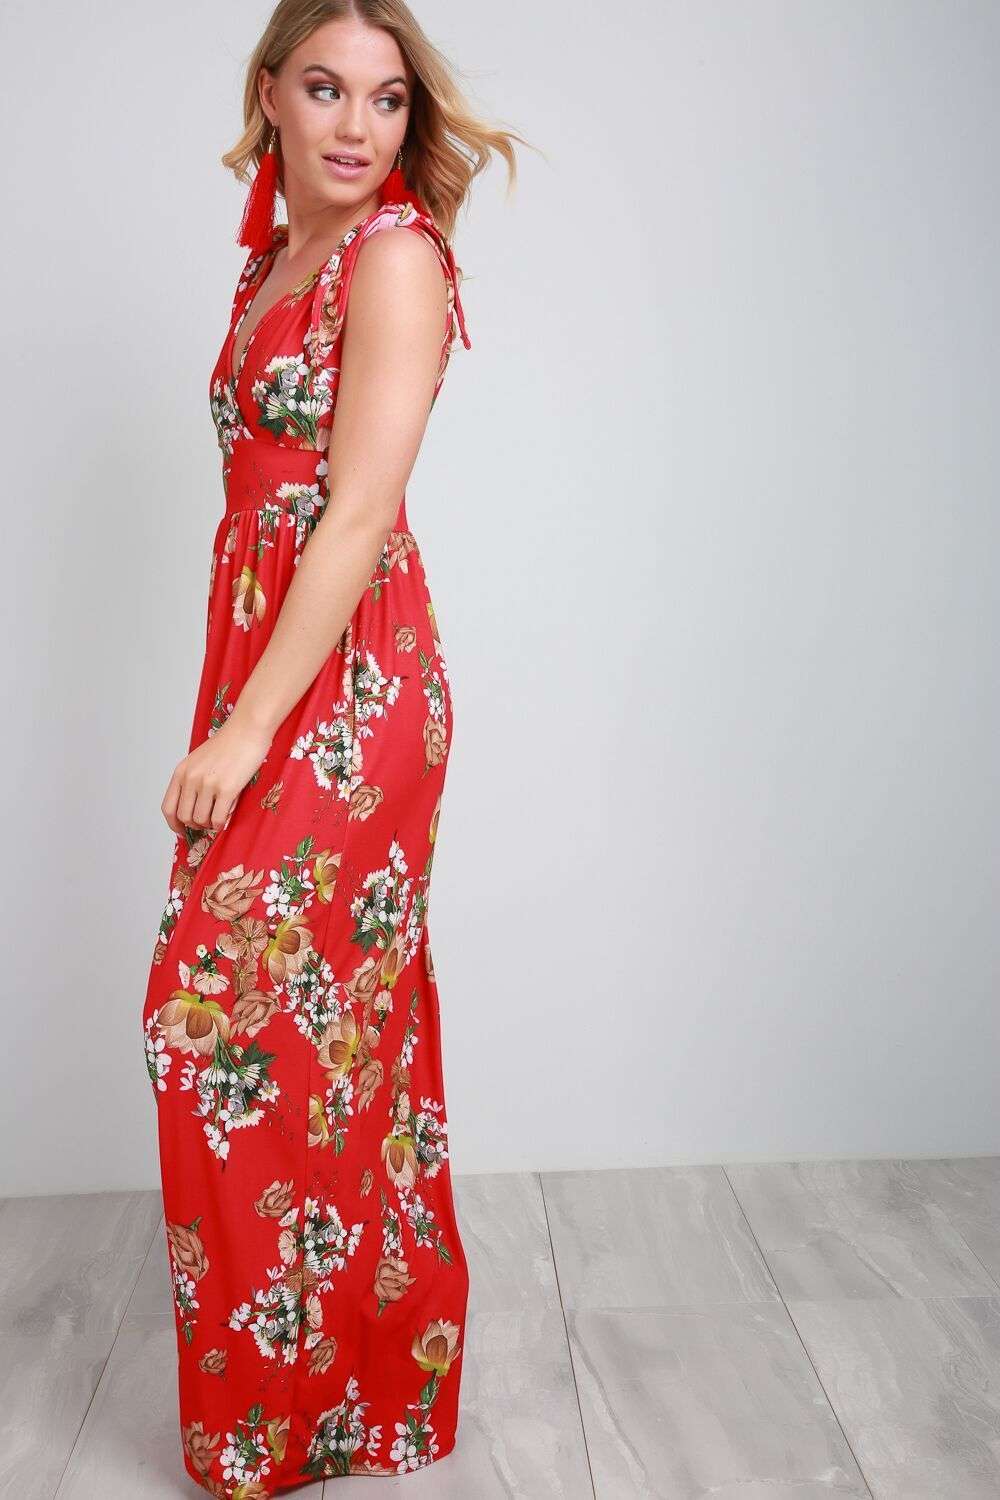 Robyn Plunge Neck Red Floral Maxi Dress - bejealous-com